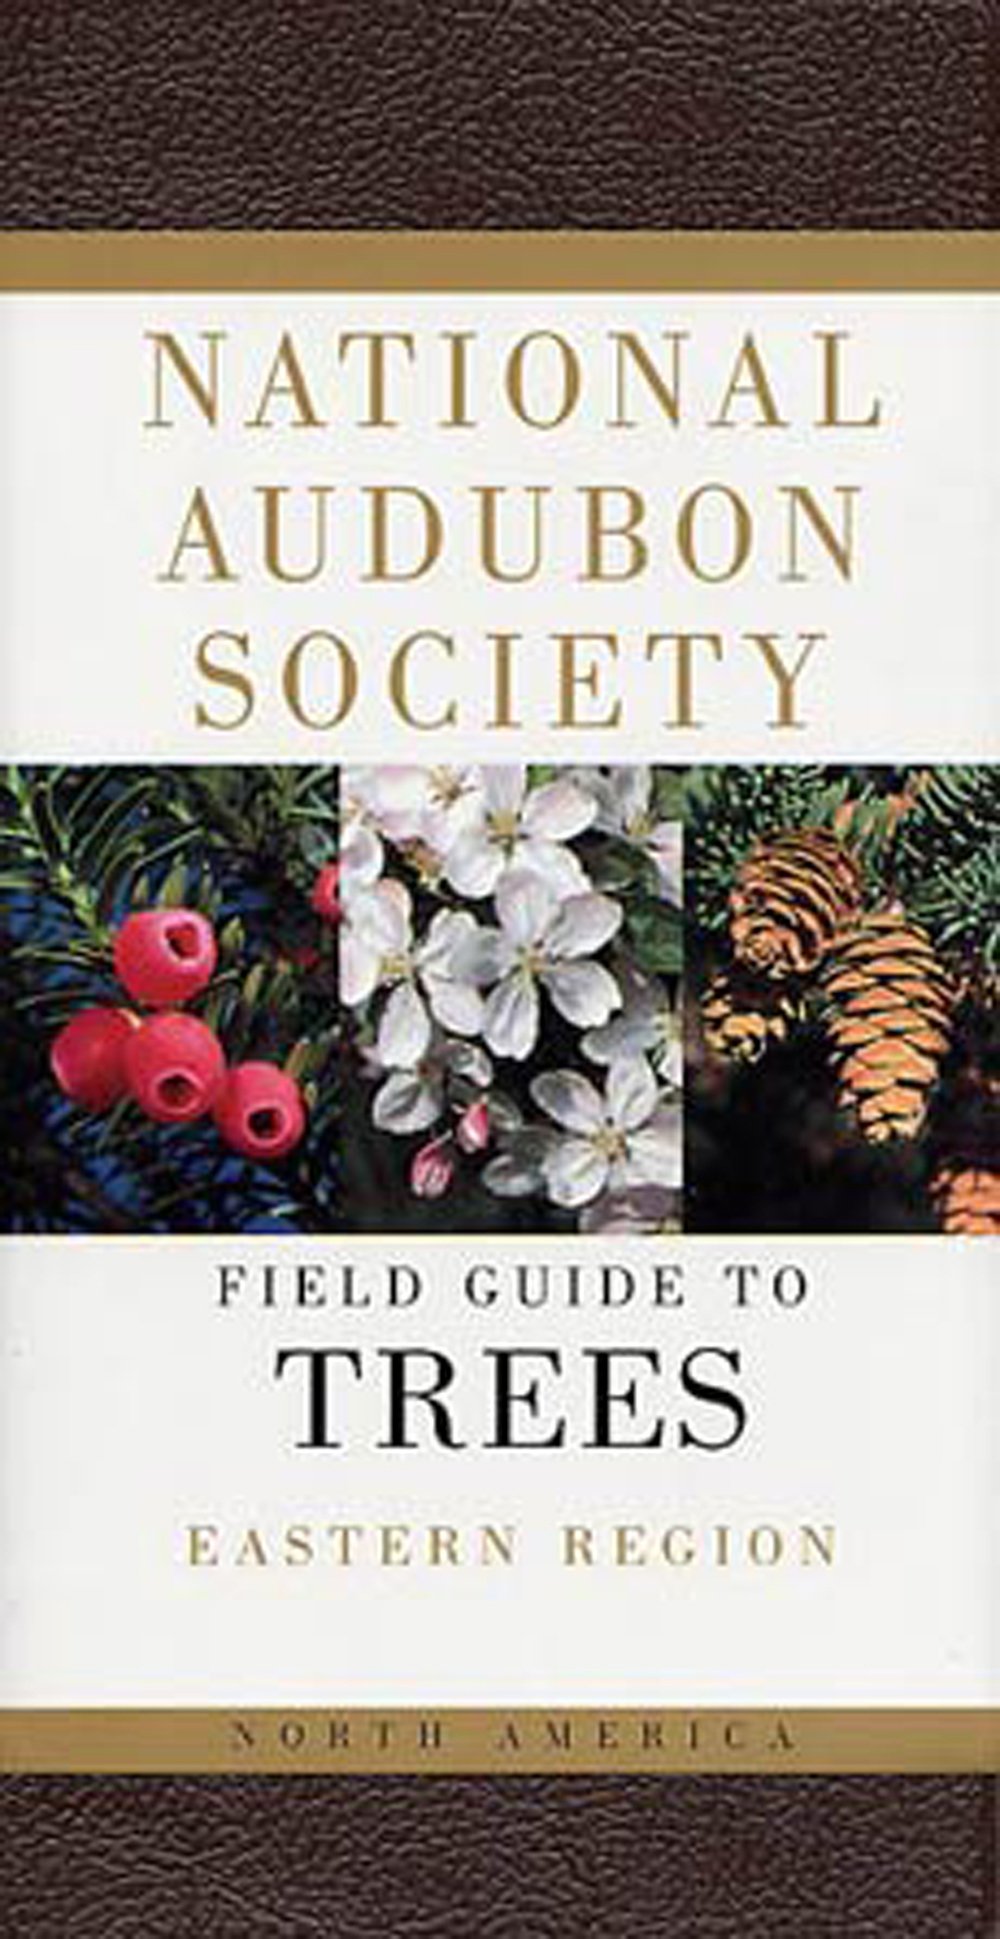 Field Guide to Trees, Eastern Region (National Audubon Society®)